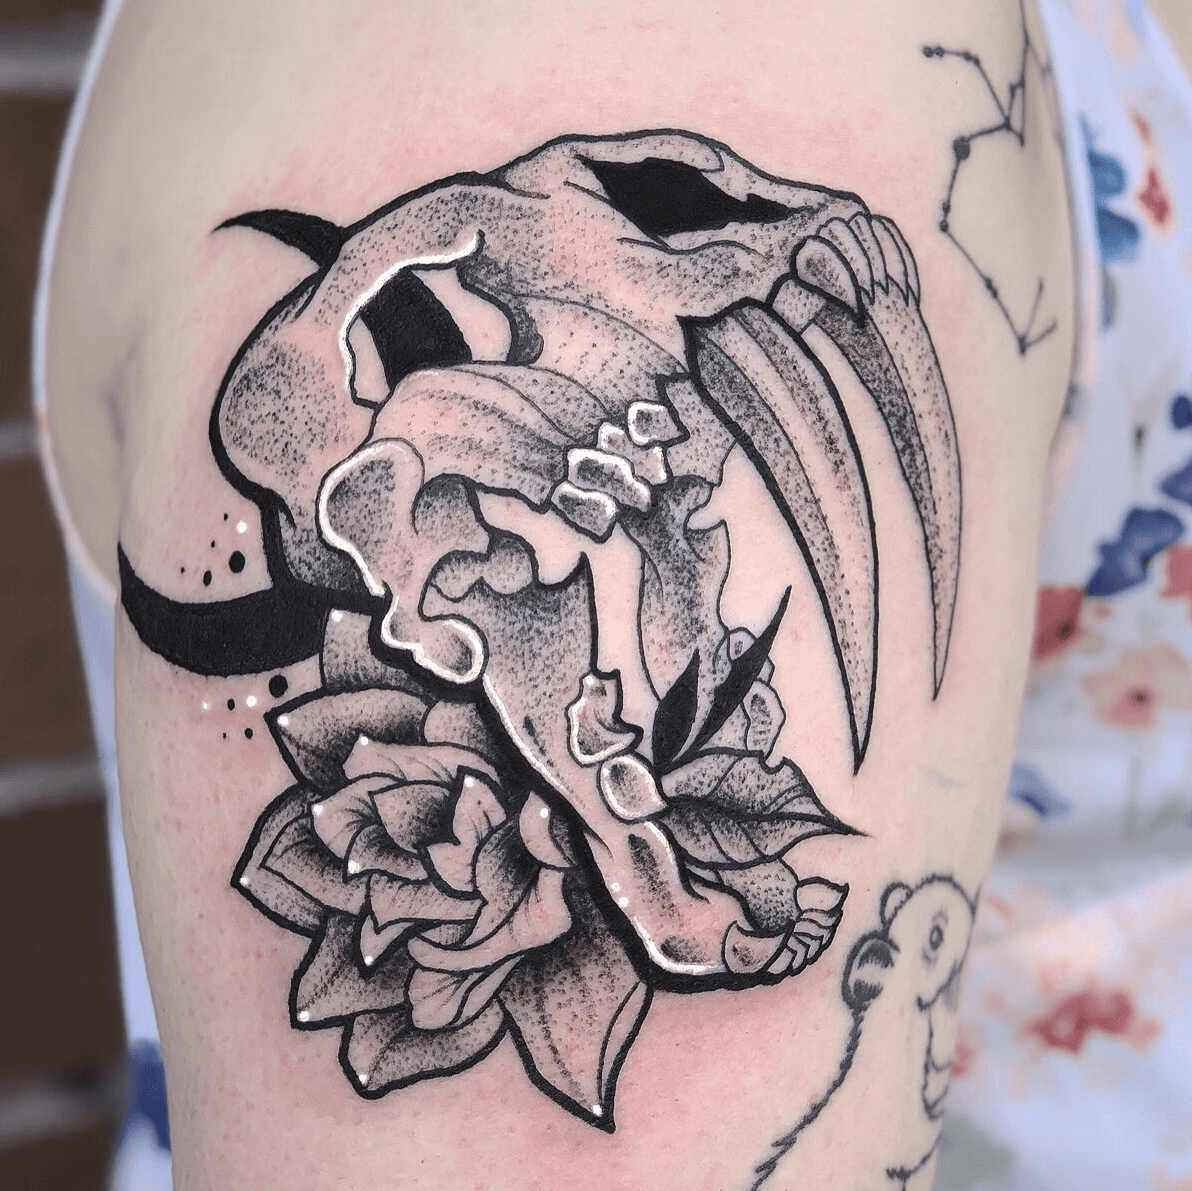 Single needle smilodon skull tattoo on the left bicep